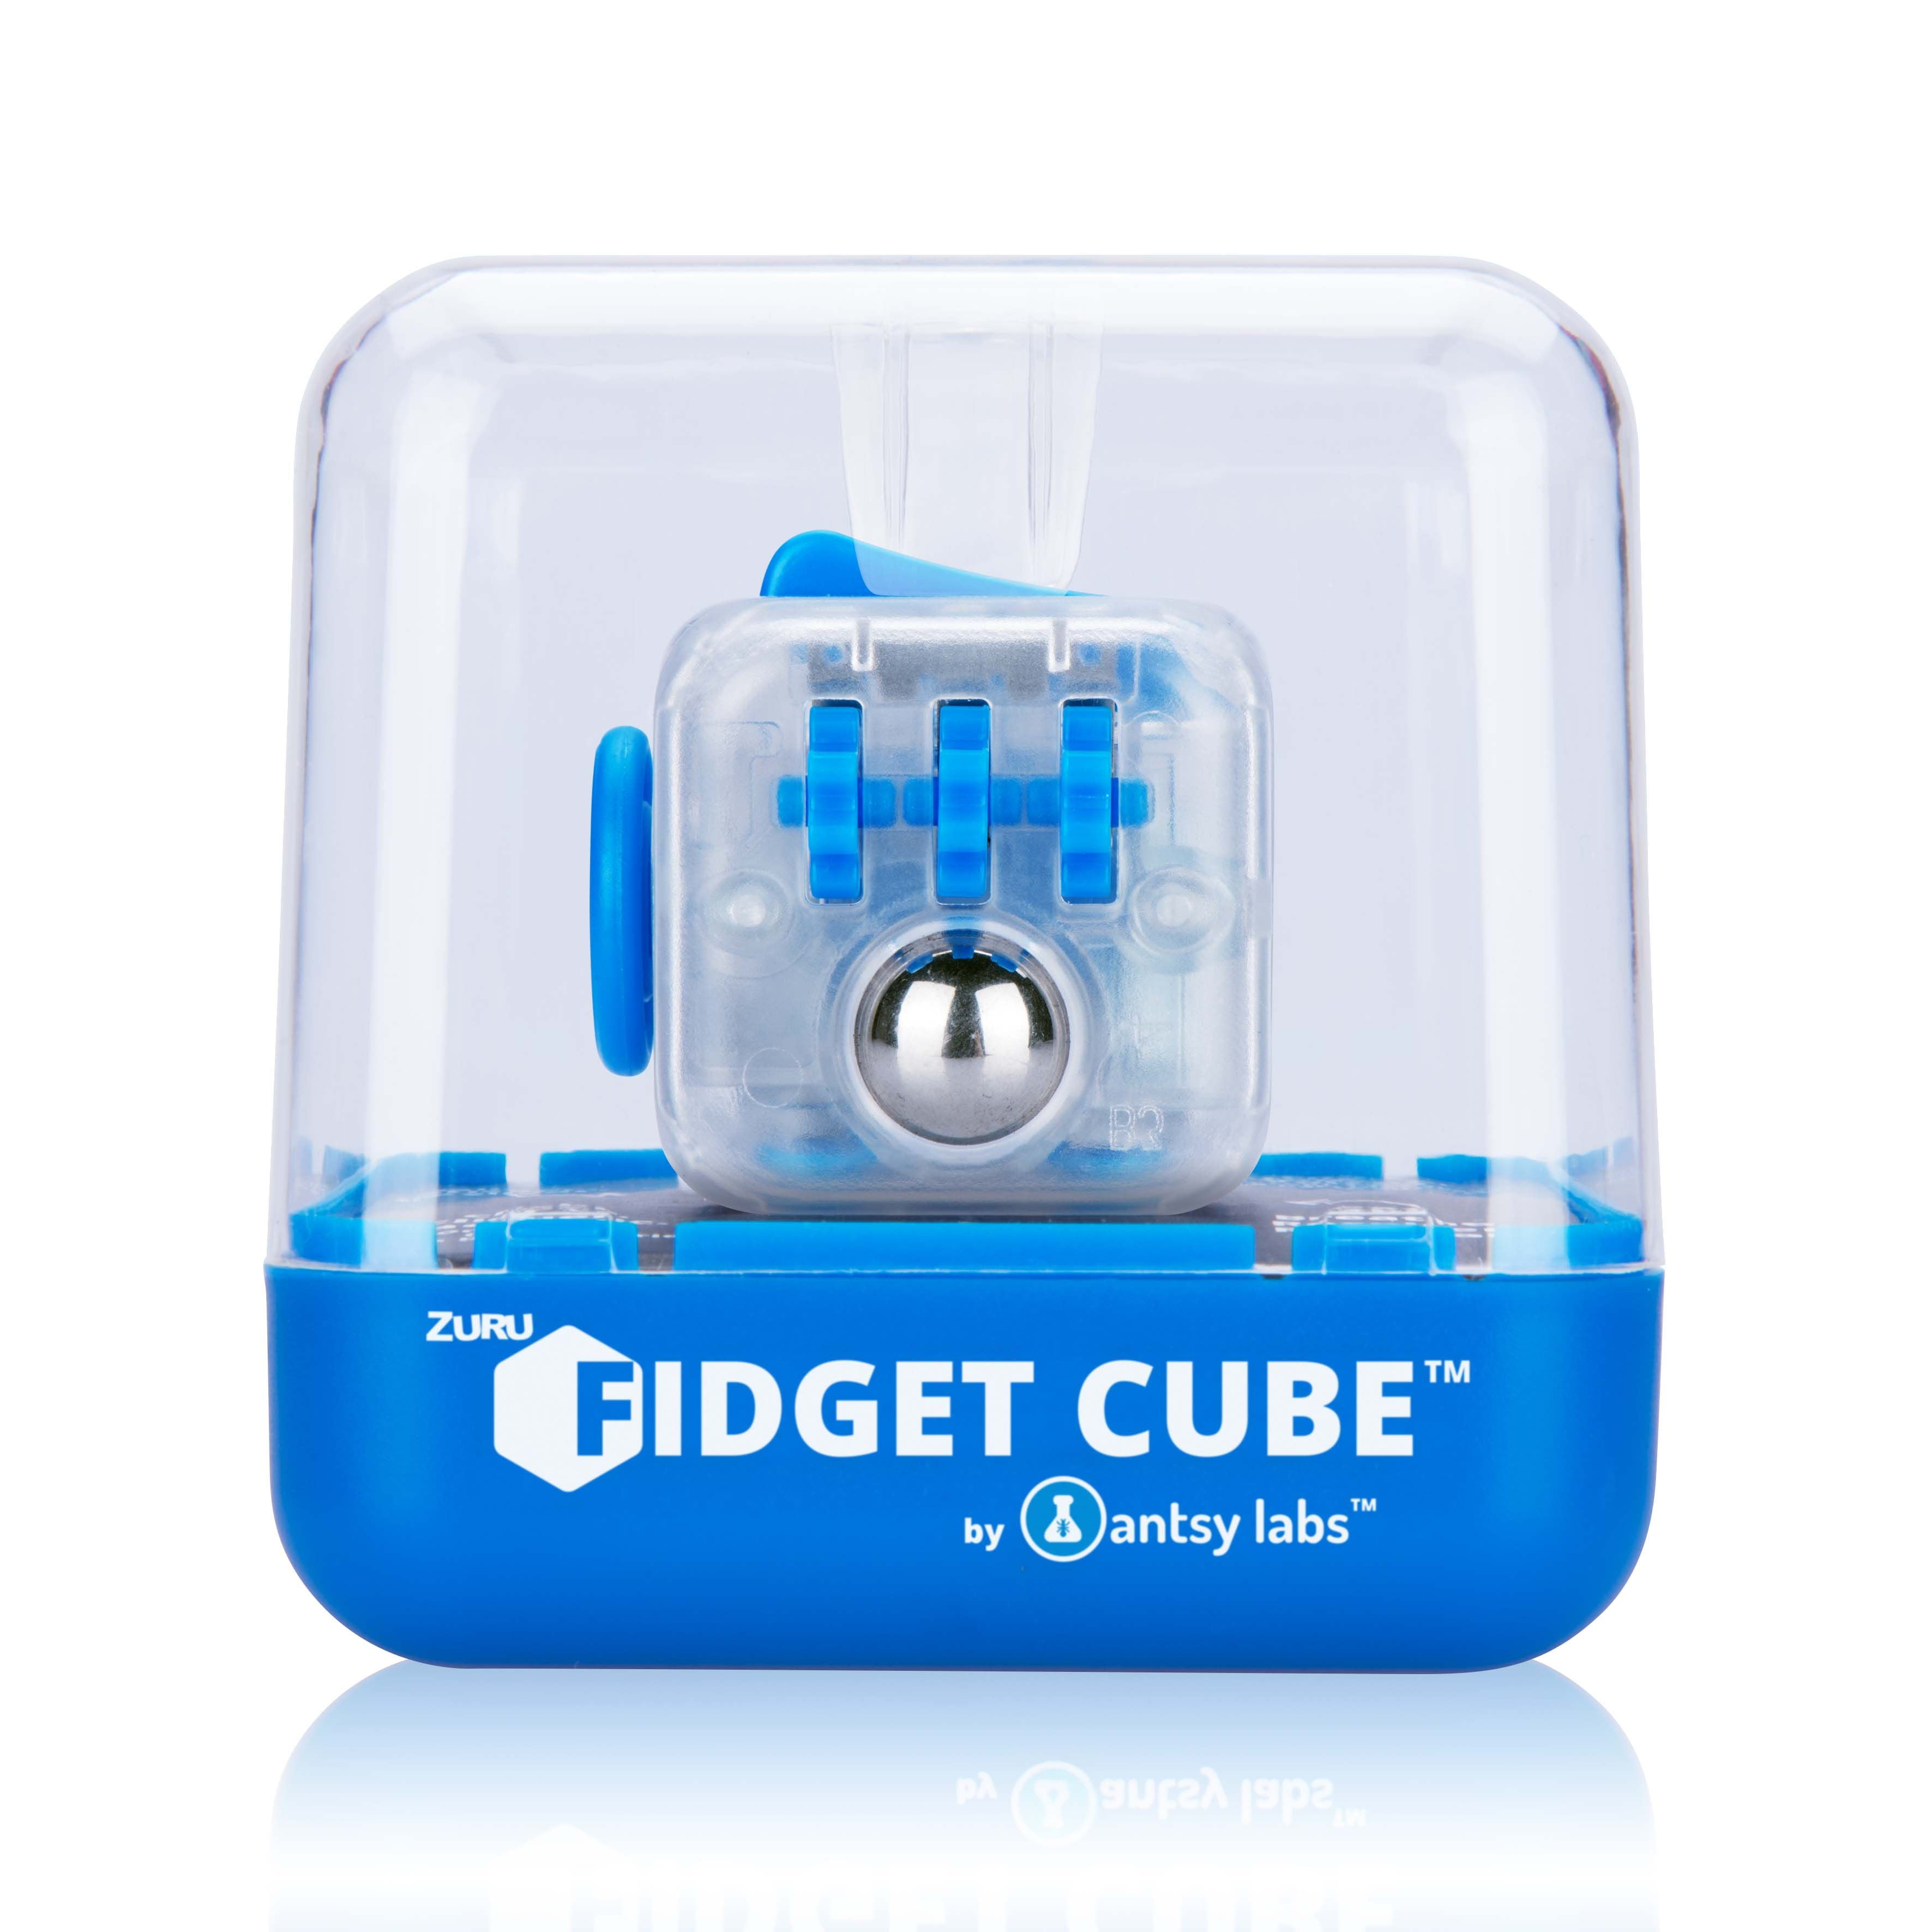 Zuru Original Fidget Cube designed by Antsy Gray Black White Great toy! NEW 